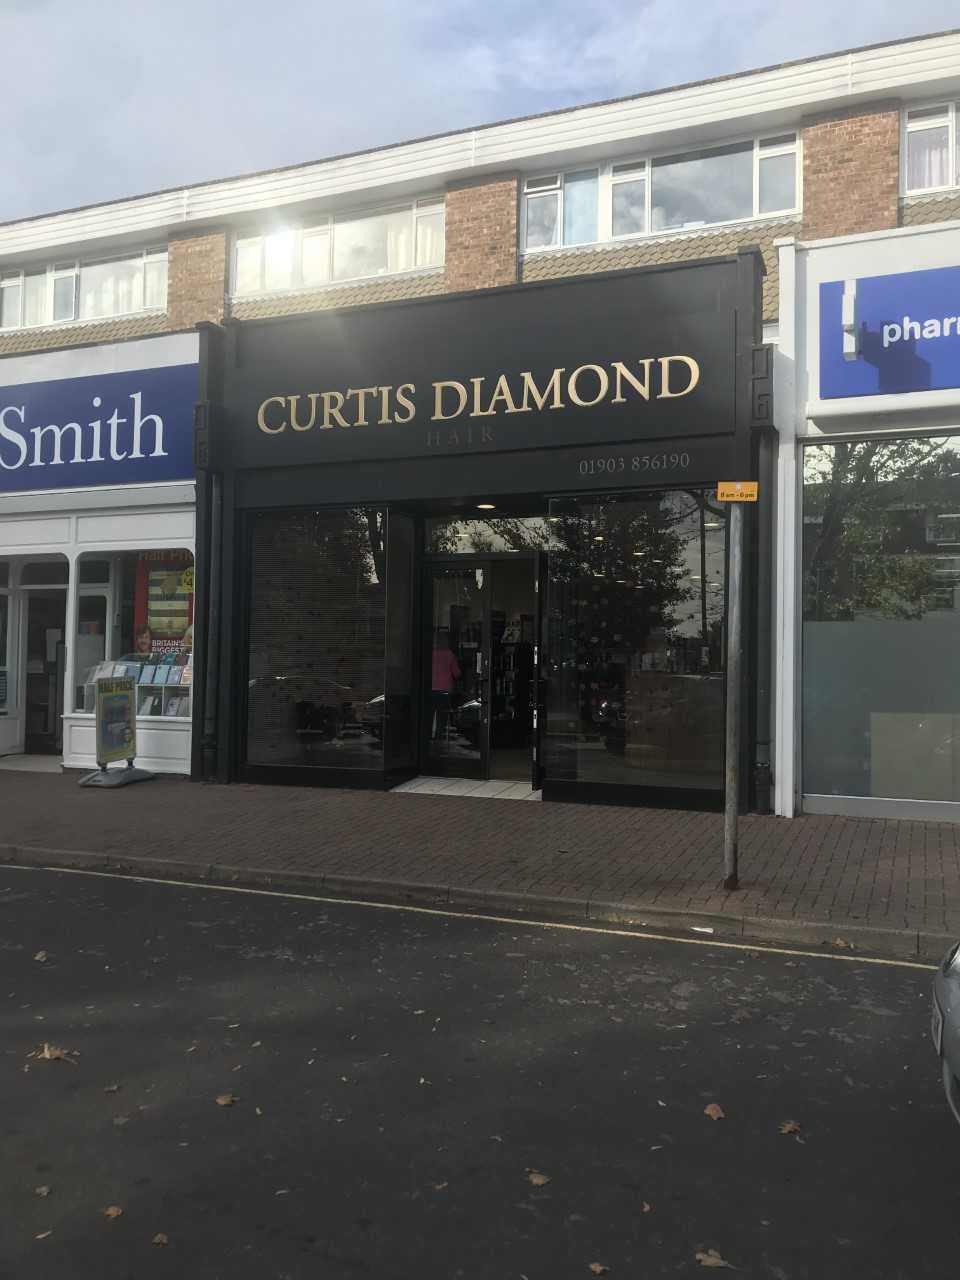 Curtis Diamond in Rustington